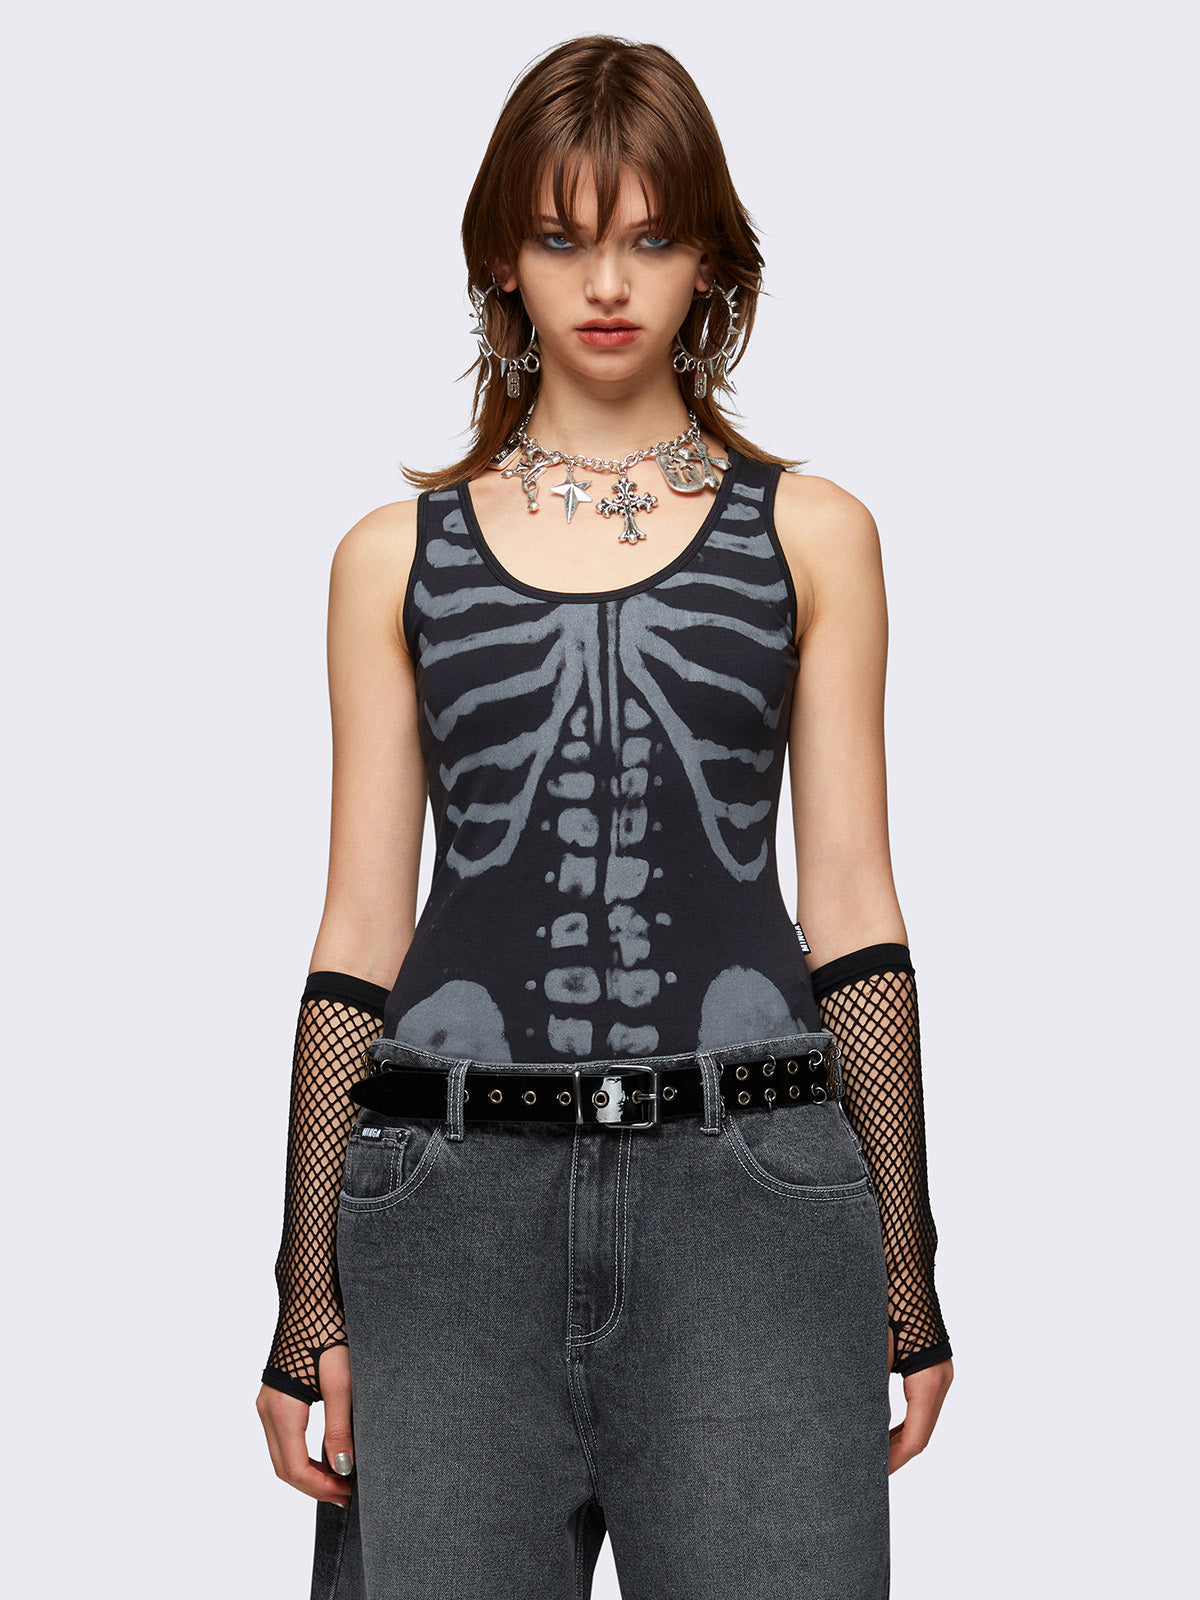 Black bodysuit with skeleton graphic print